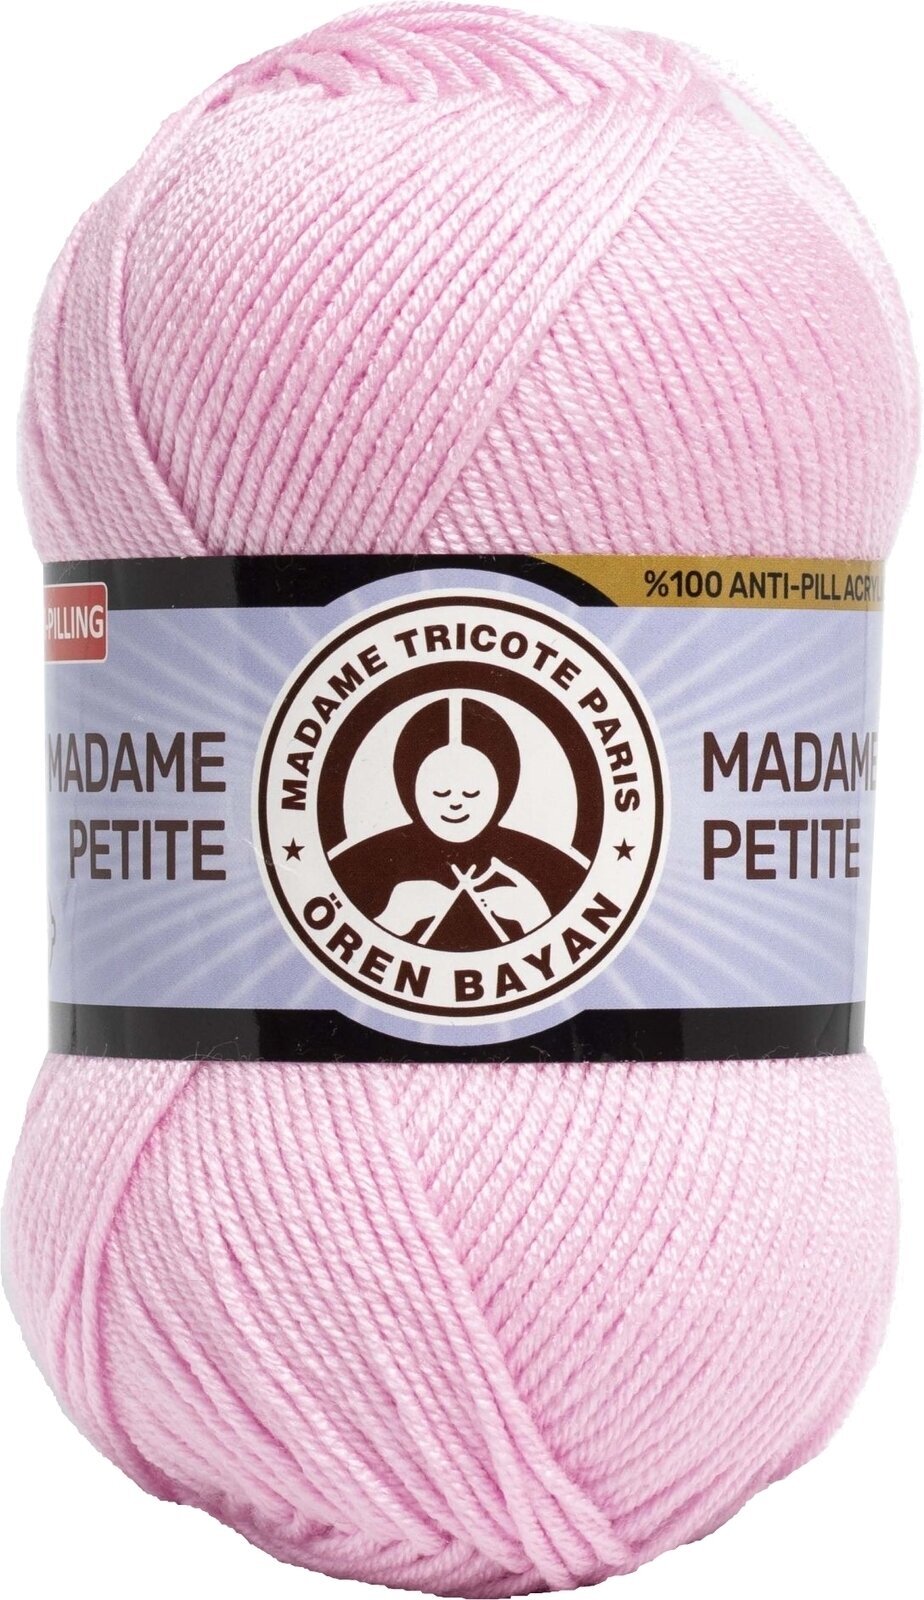 Neulelanka Madame Tricote Paris Madame Petite 3848 93 Neulelanka